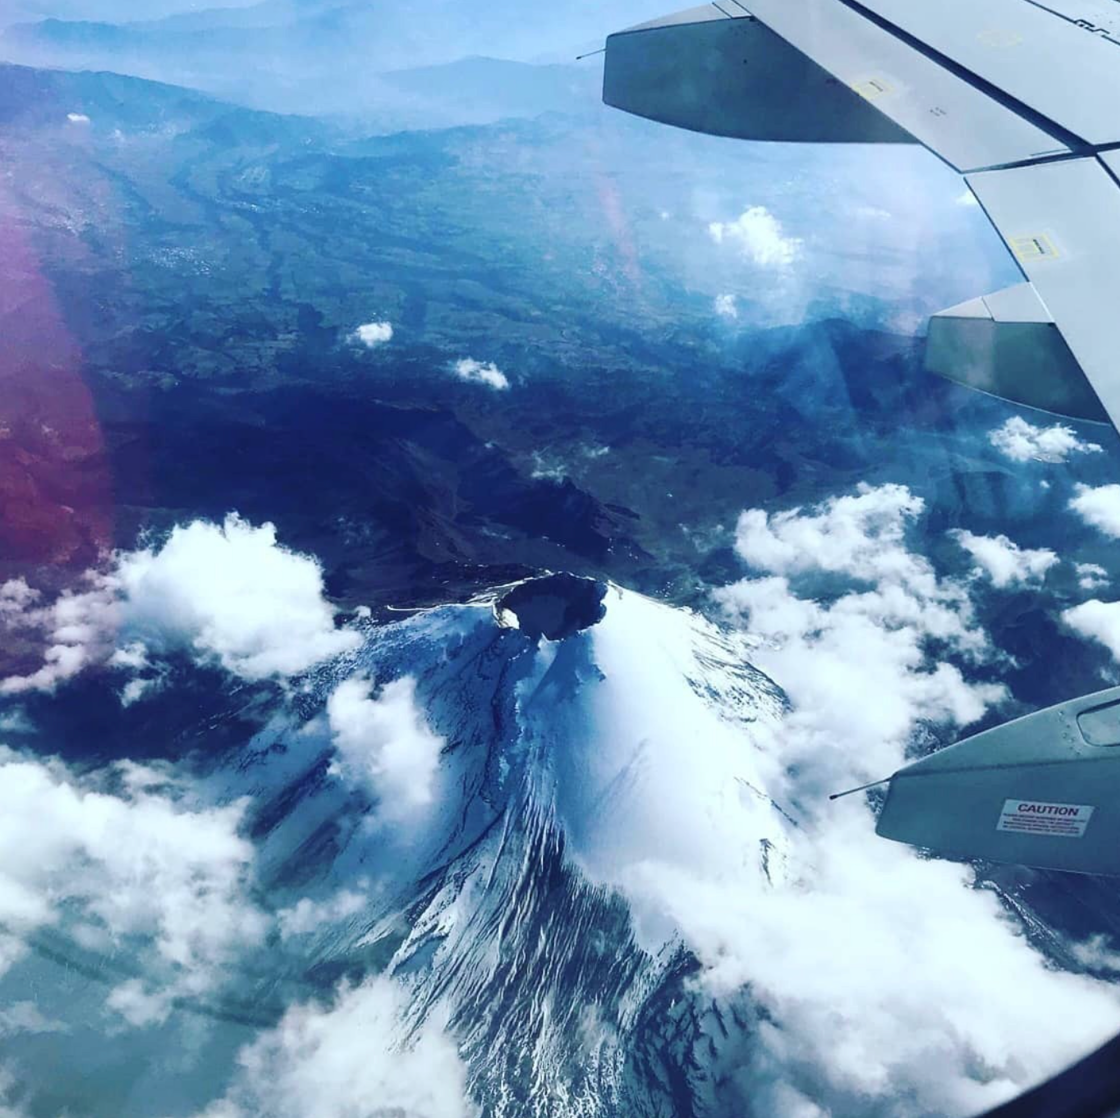  An aerial view of Pico de Orizaba. Credit: Pico de Orizaba/Instagram.